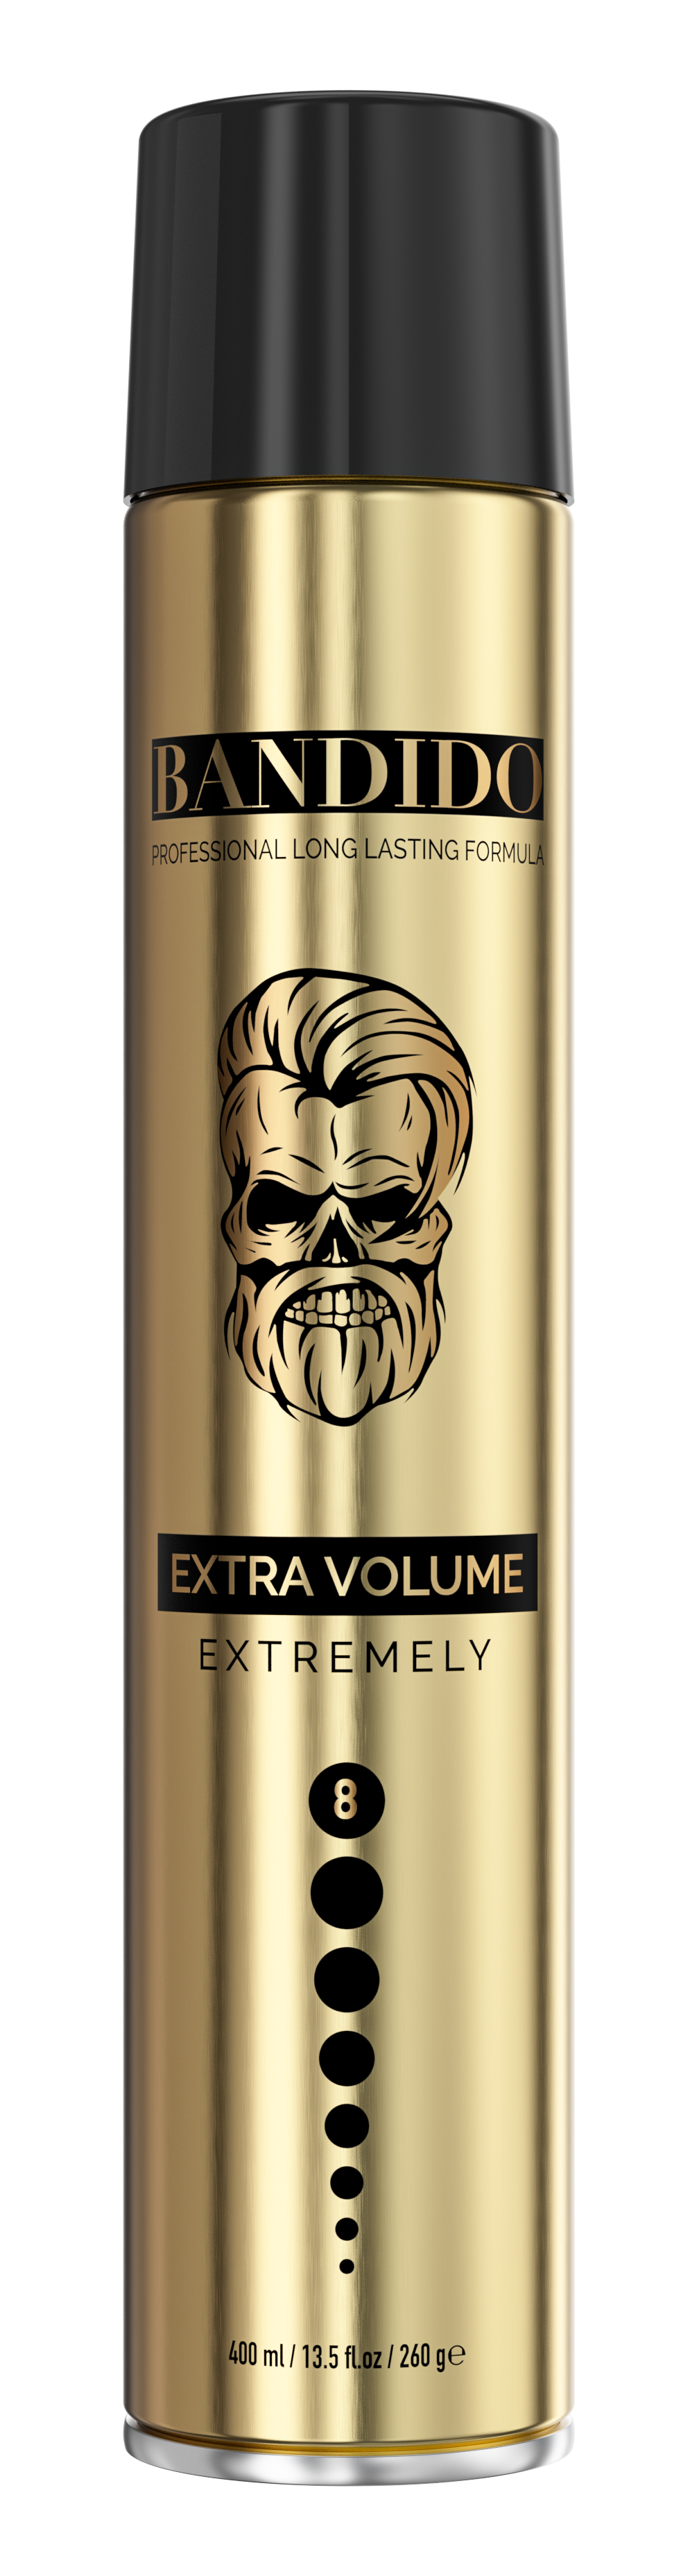 Bandido Hair Spray Extra Volume Extremely Gold 400ml/13.5fl oz